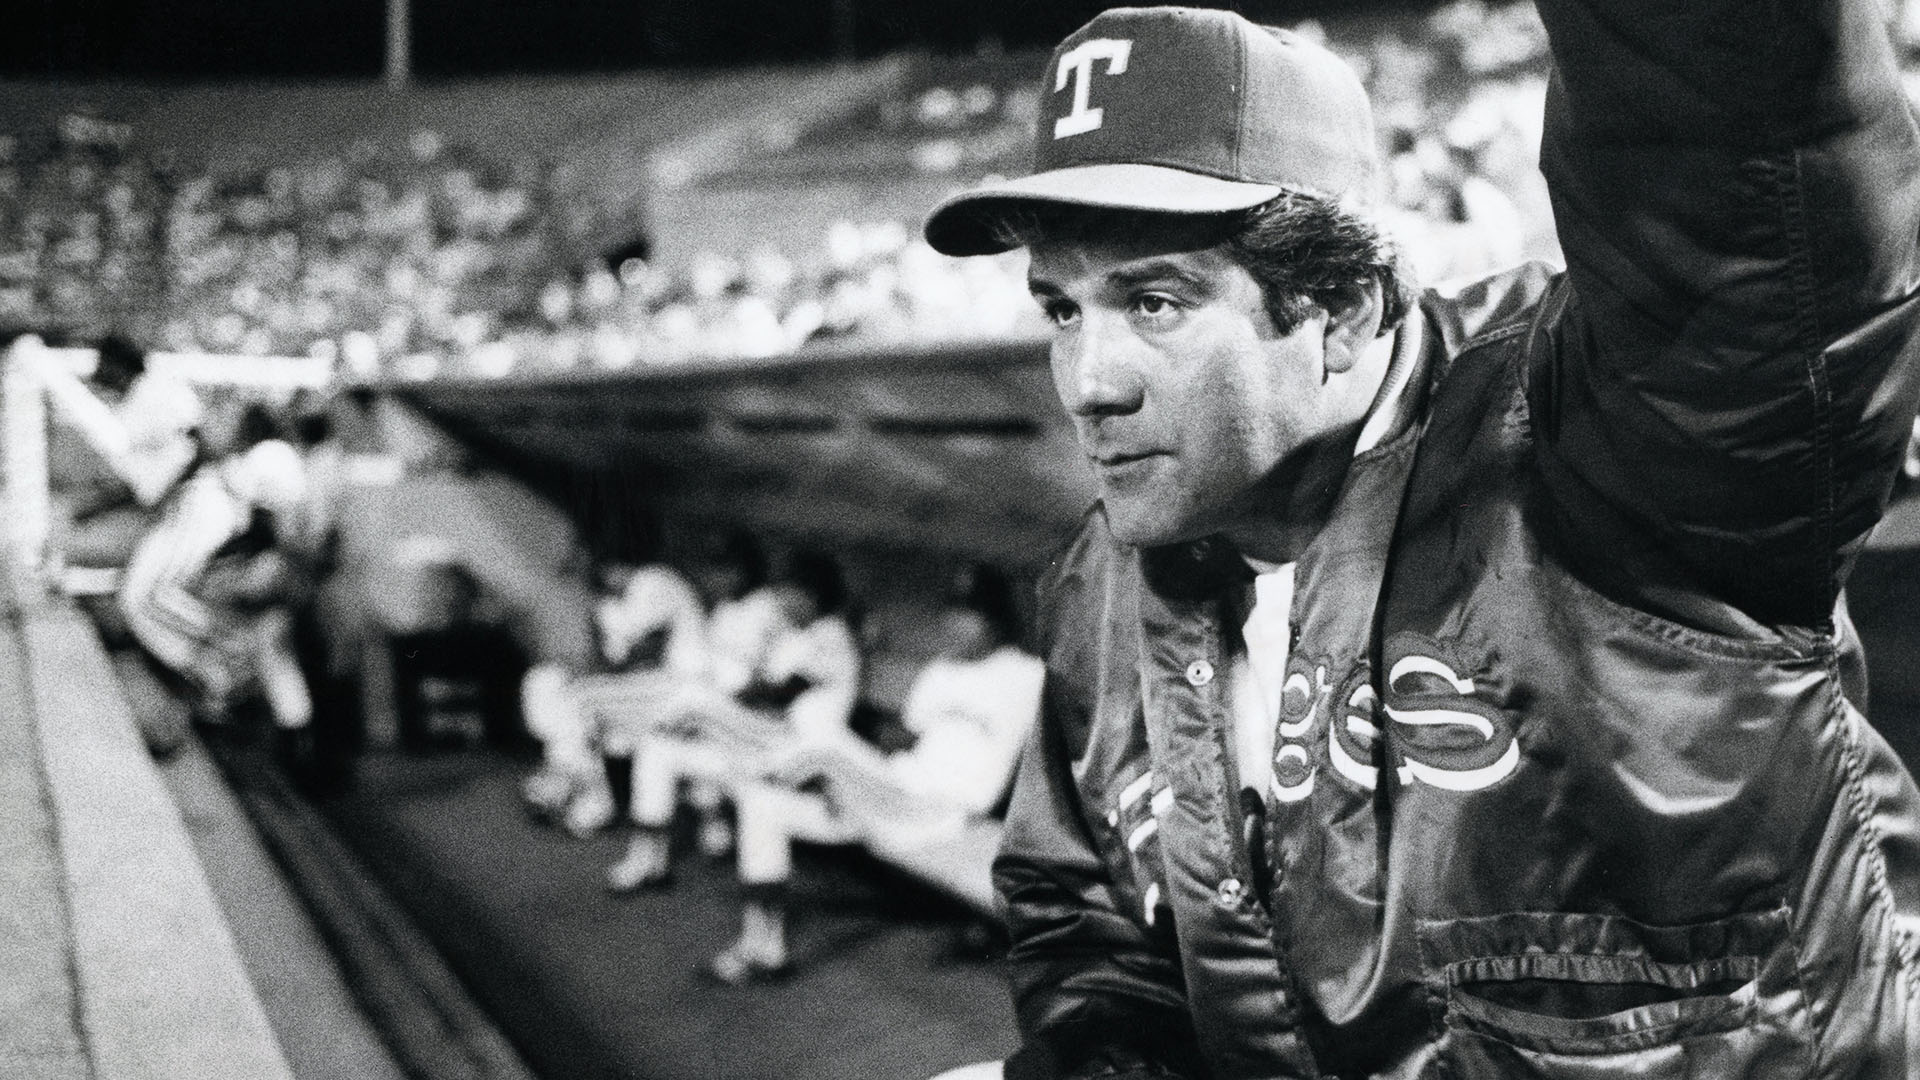 Pat Corrales, Manager of Three Major League Teams, Dies at 82